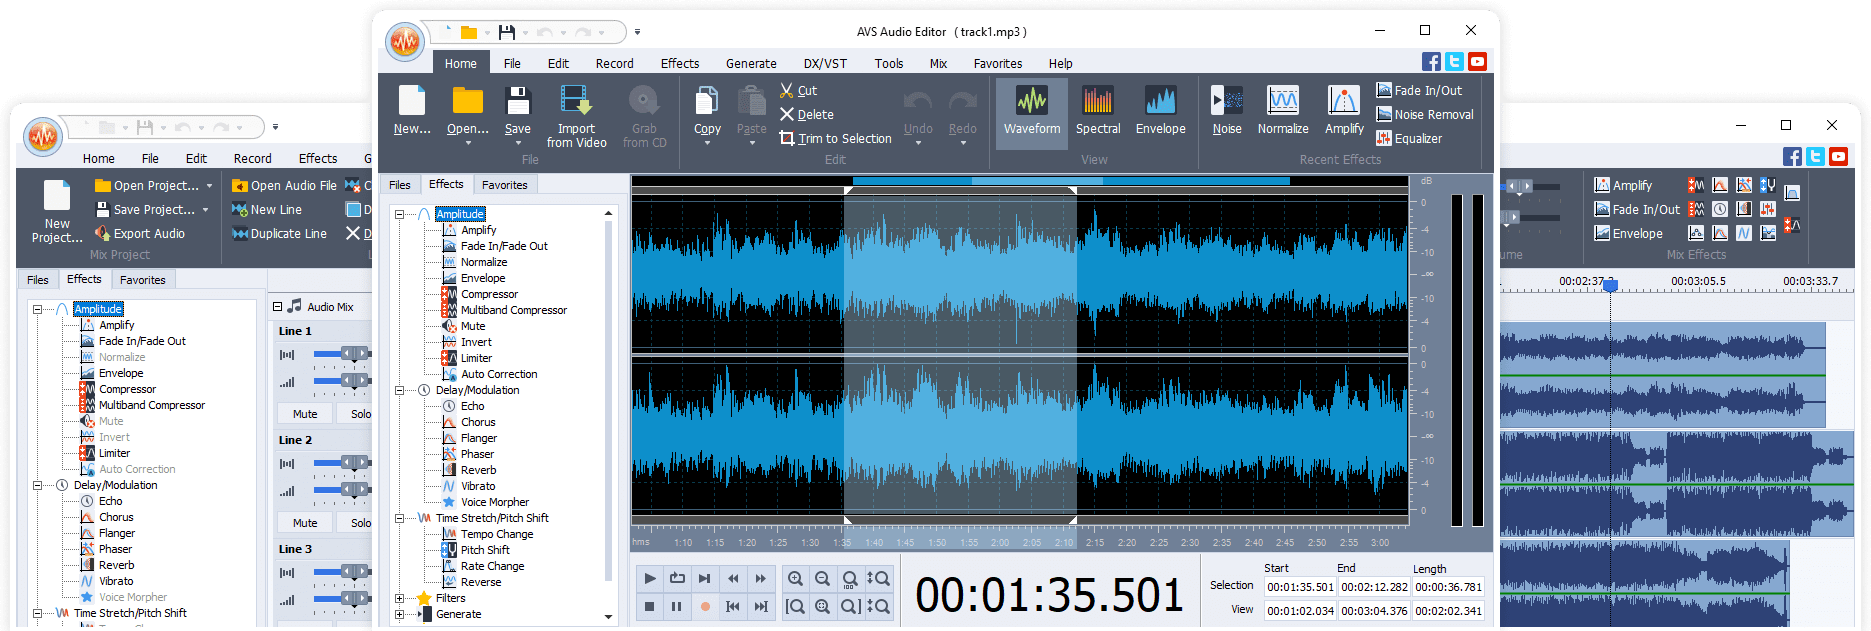 AVS Audio Editor 10.4.3.574 Portable Hrjc